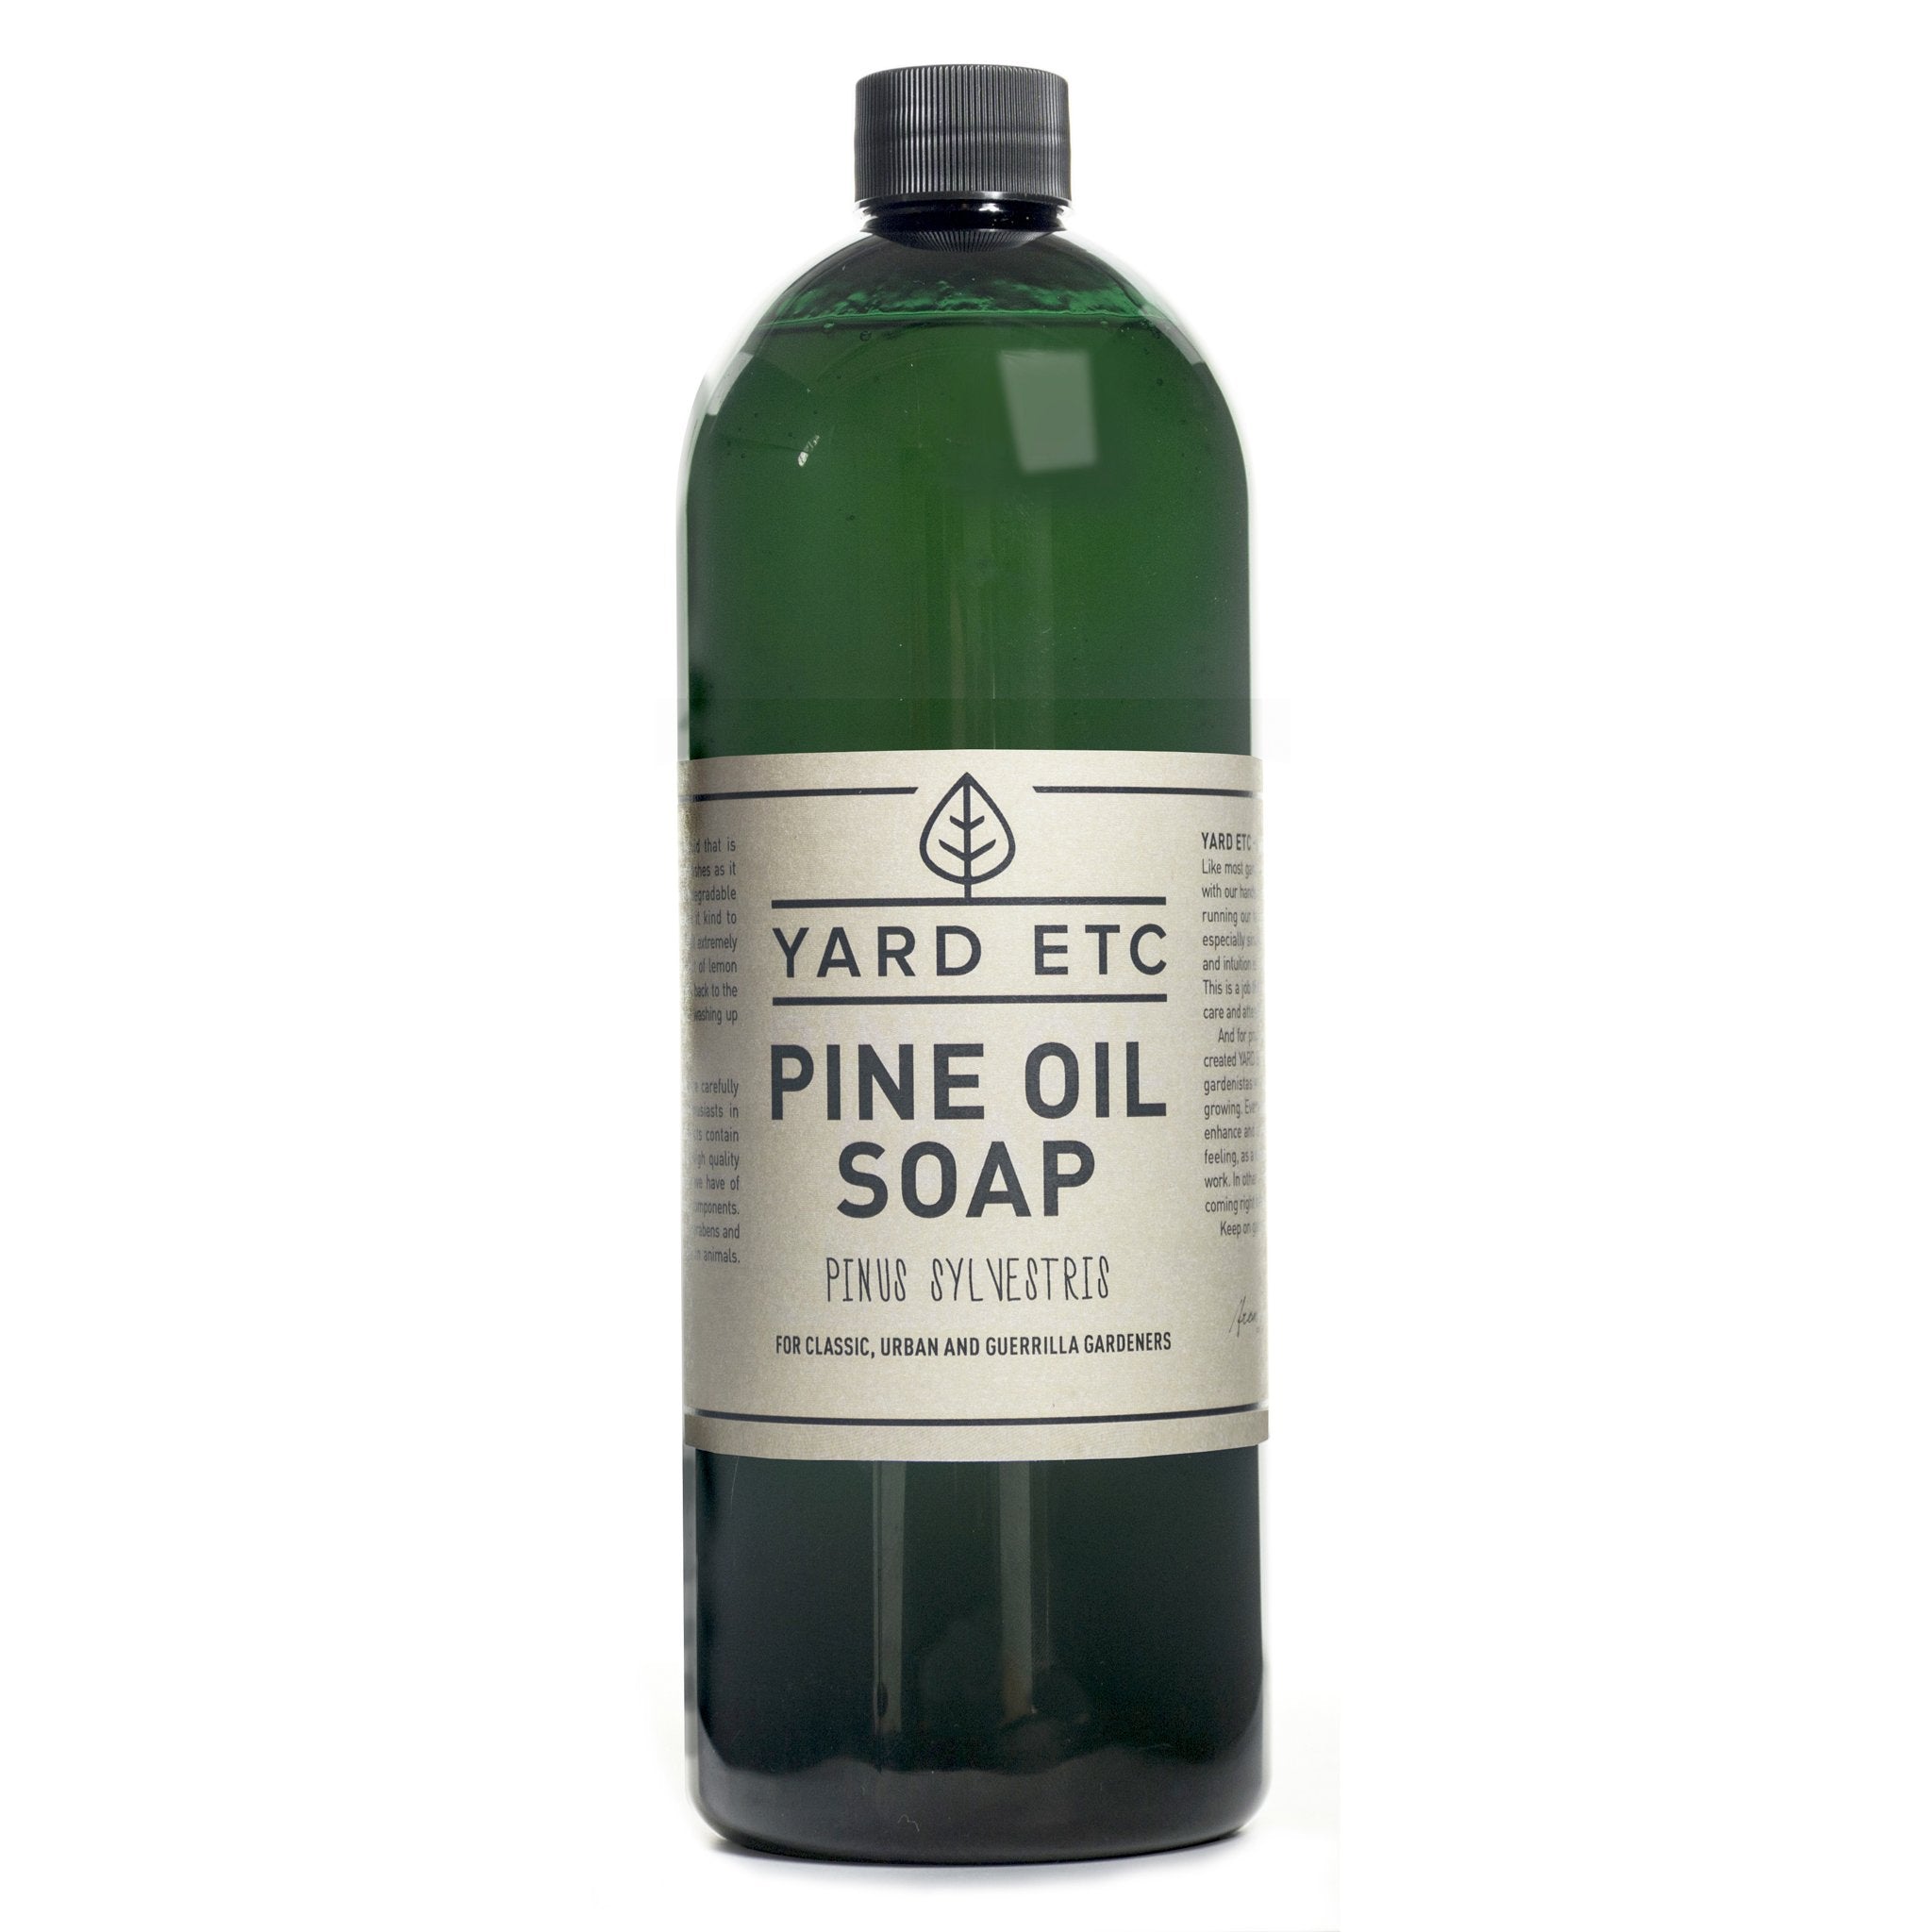 Yard Etc Pine Oil Soap (1000ml)